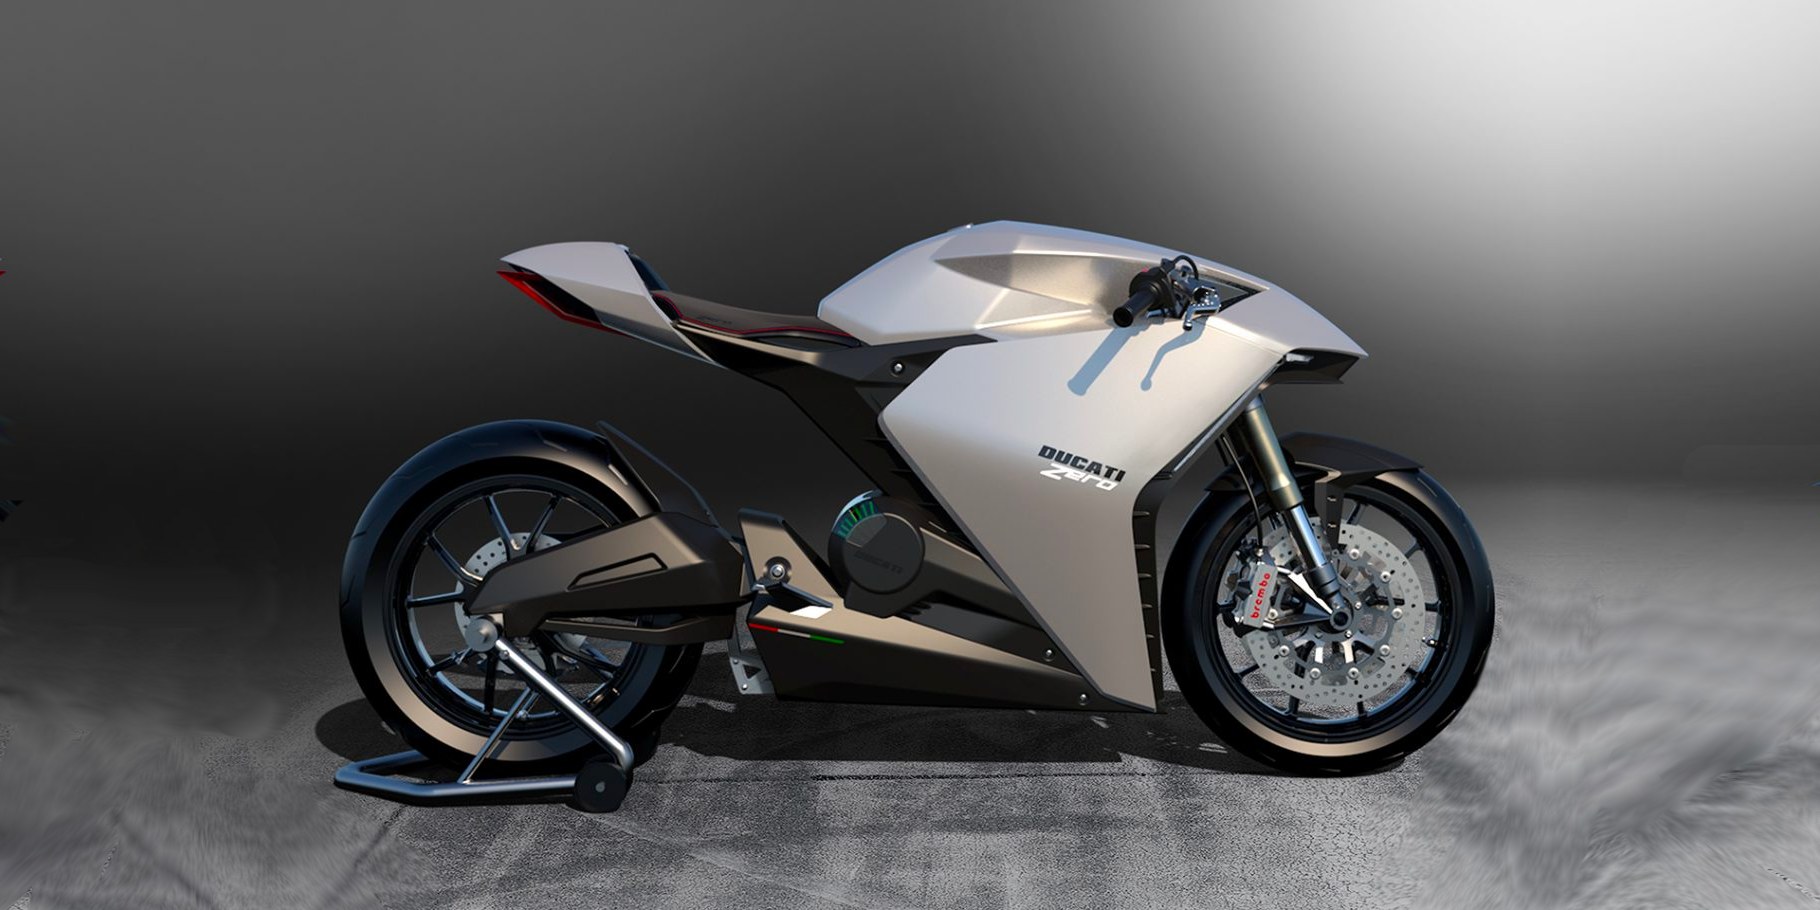 Автомобиль байк производитель. Ducati Zero Electric Superbike 2020. Электромотоцикл Ducati. Дукати мотоцикл электрический. Электробайк Дукати.